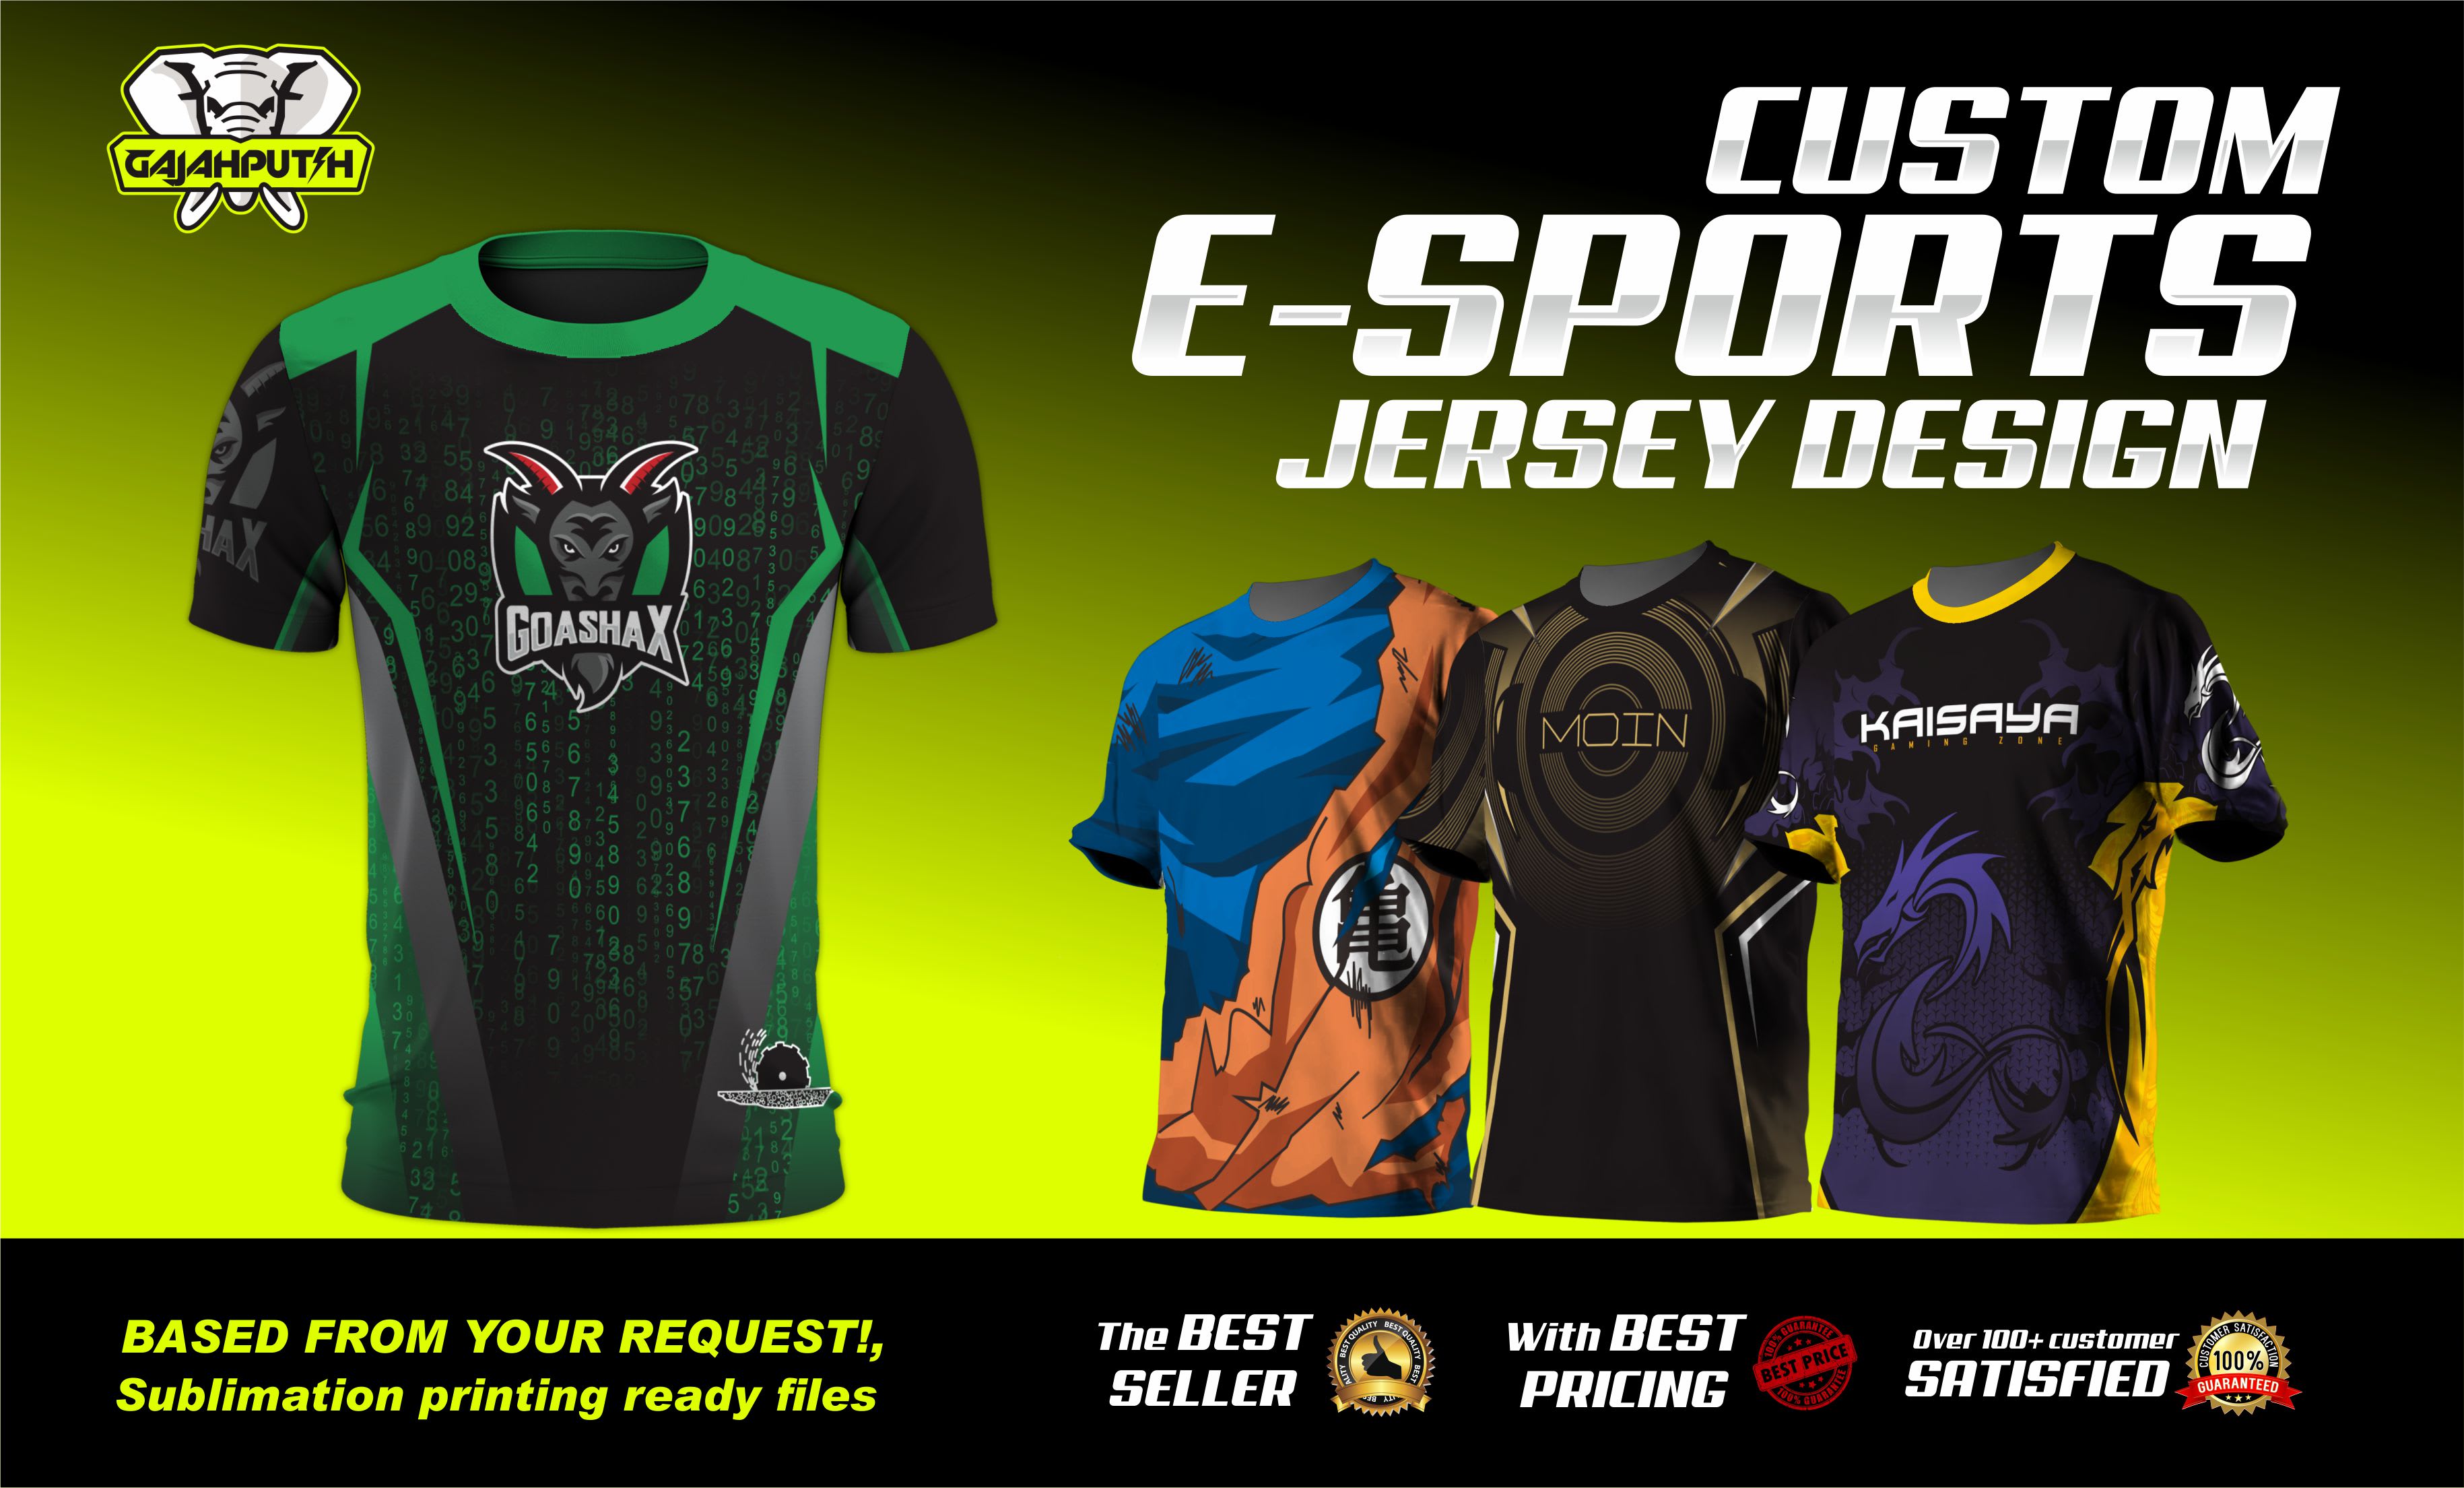 Make esports jersey design, based for 